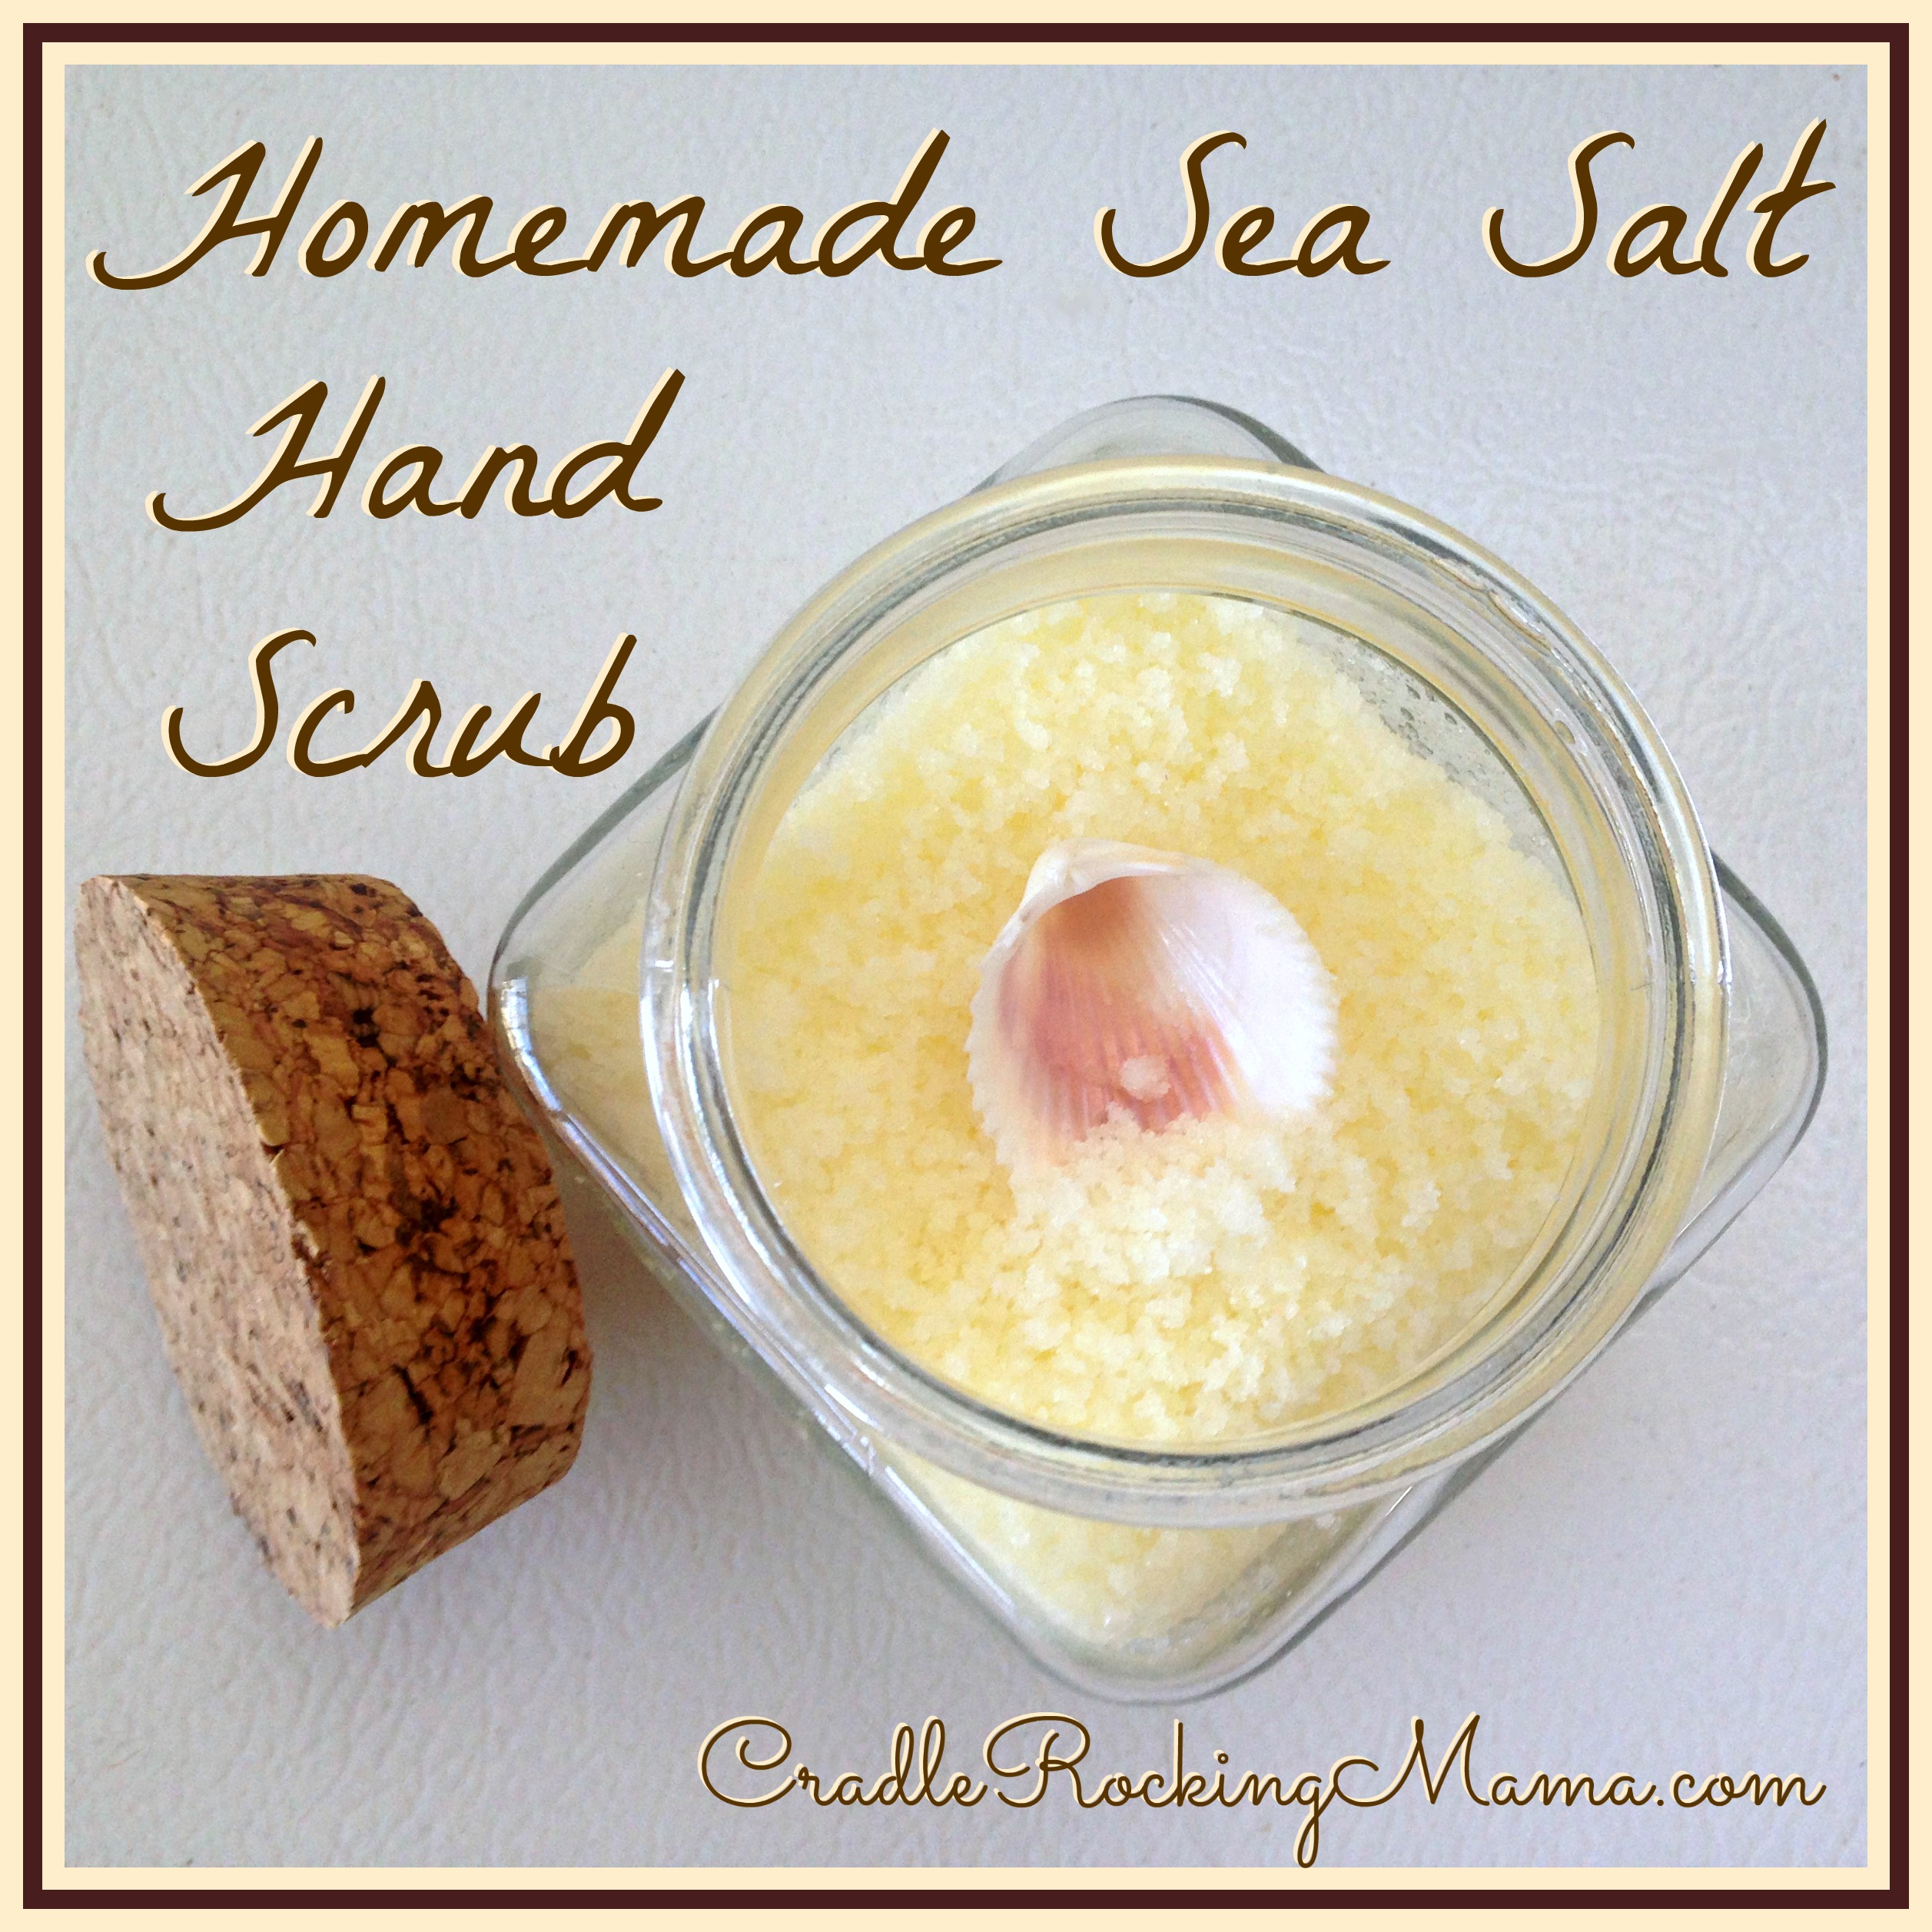 Homemade Sea Salt Han